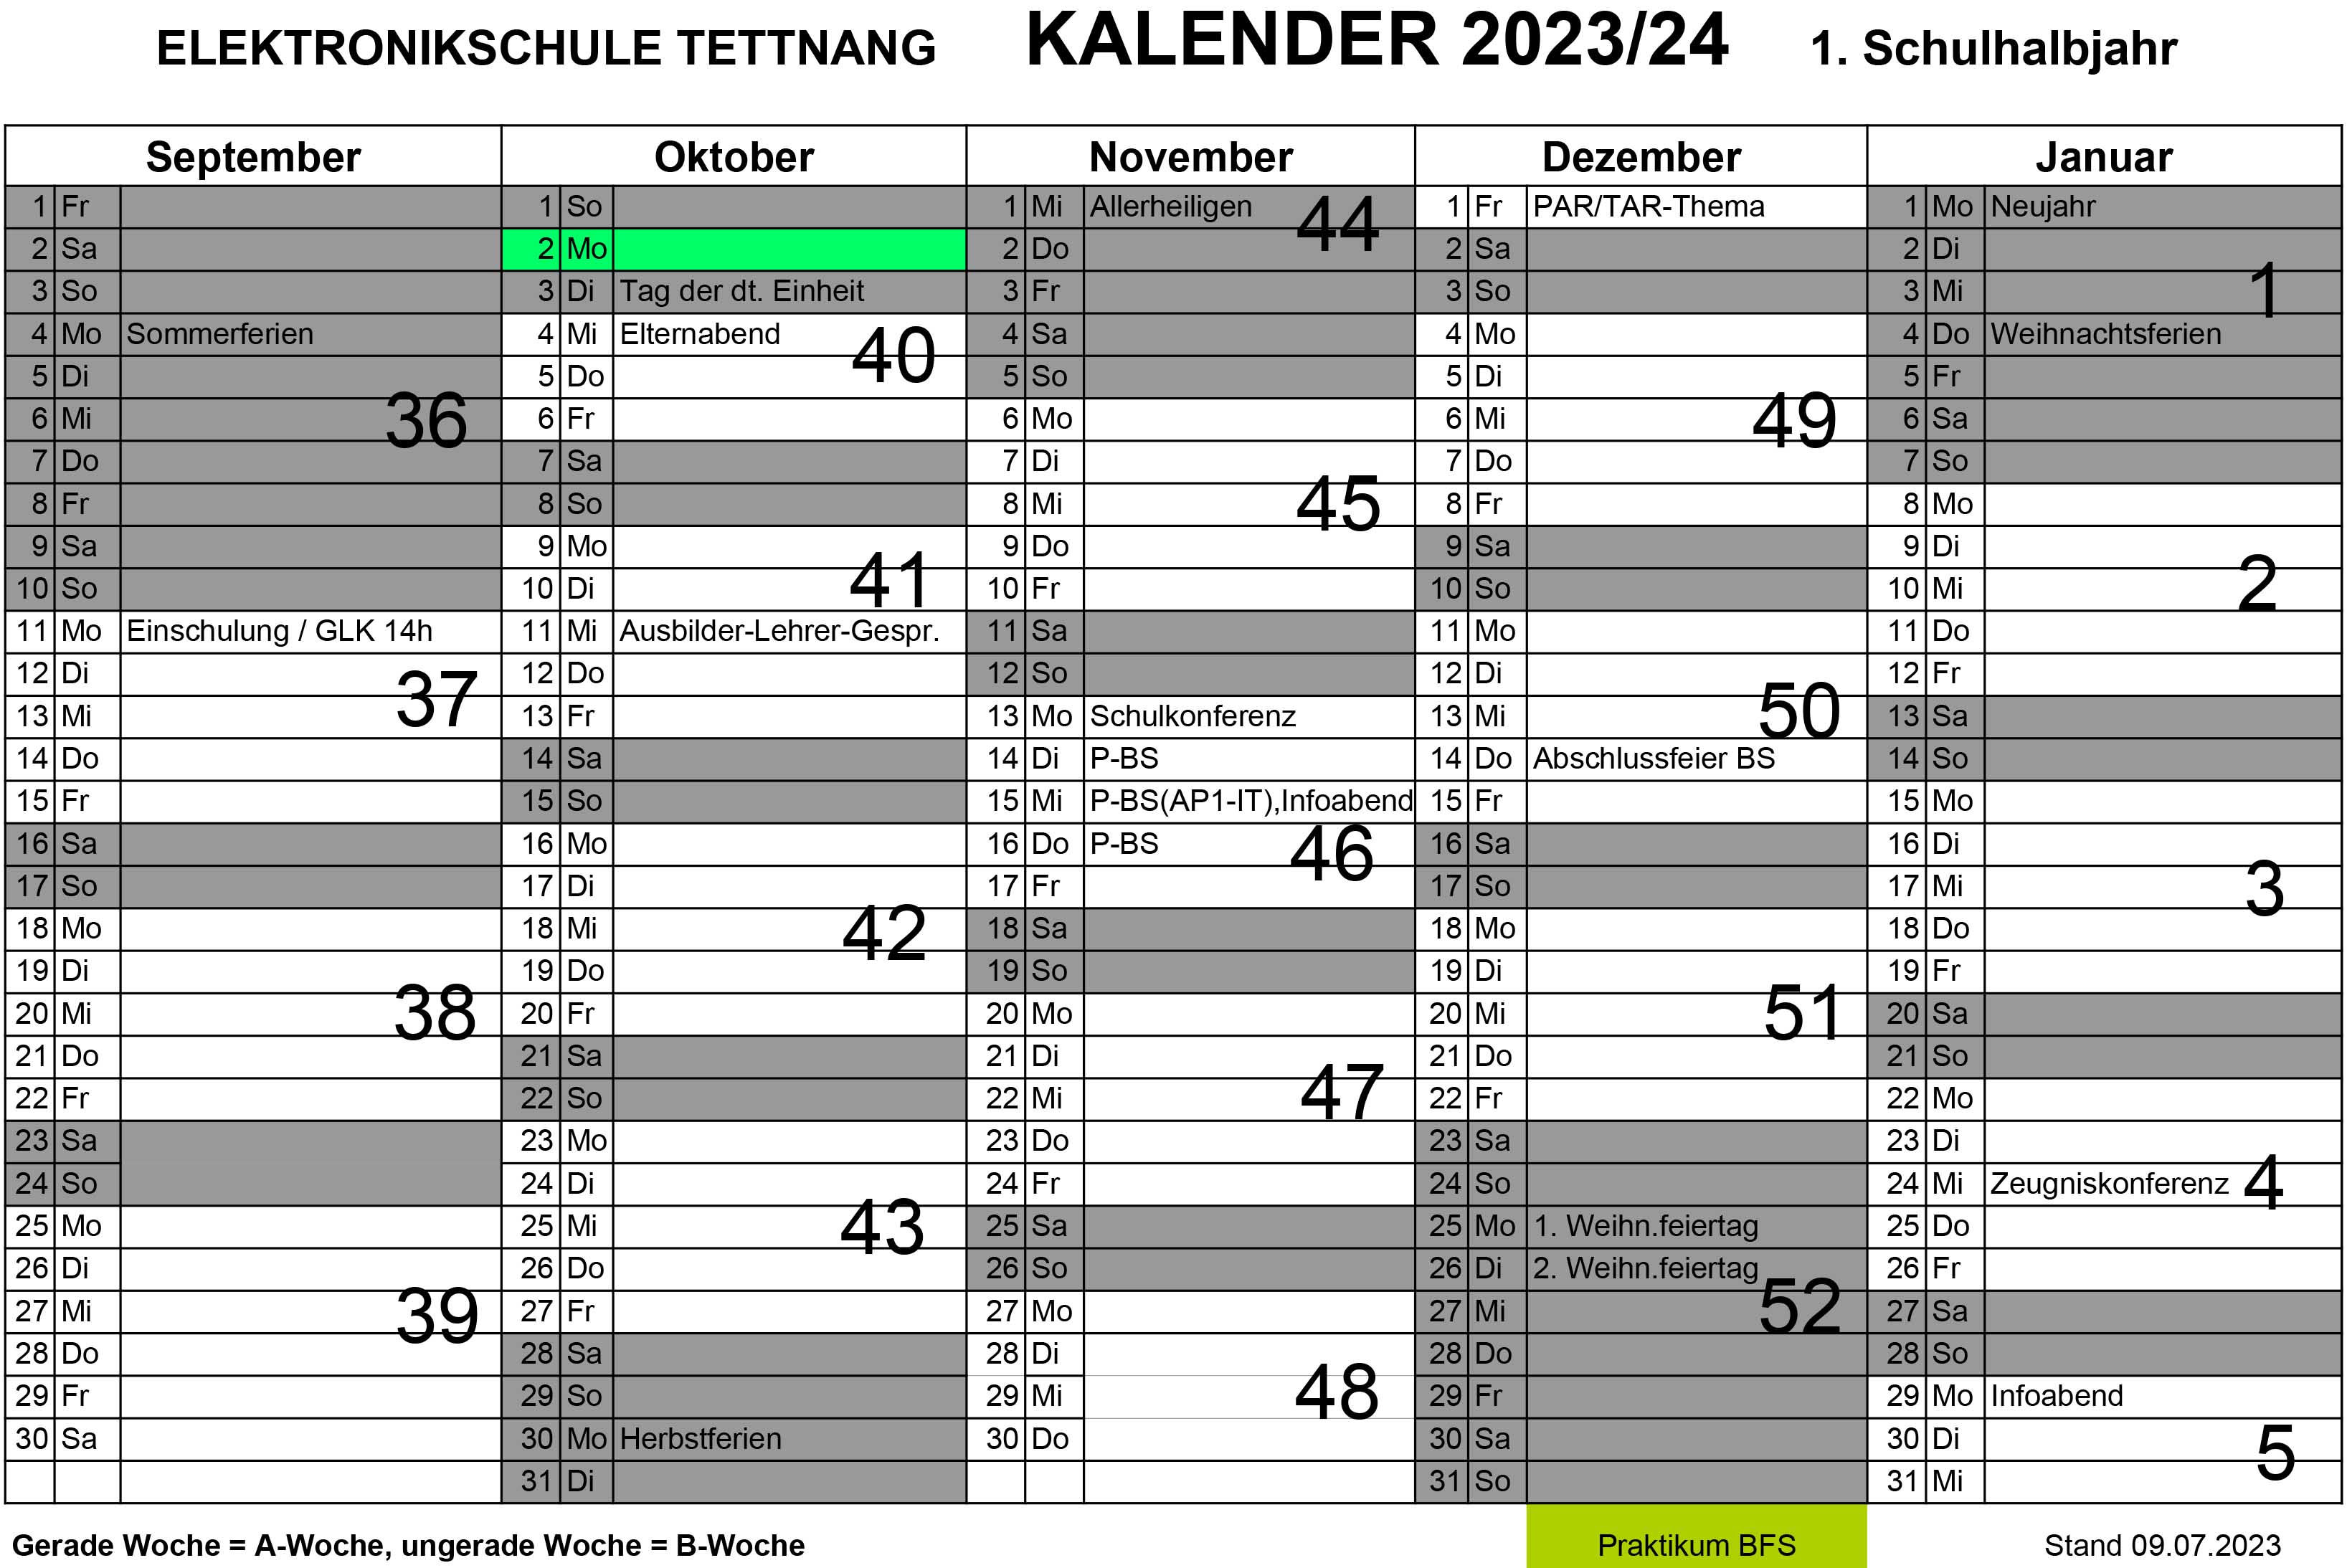 EST KALENDER 2022 23 220205